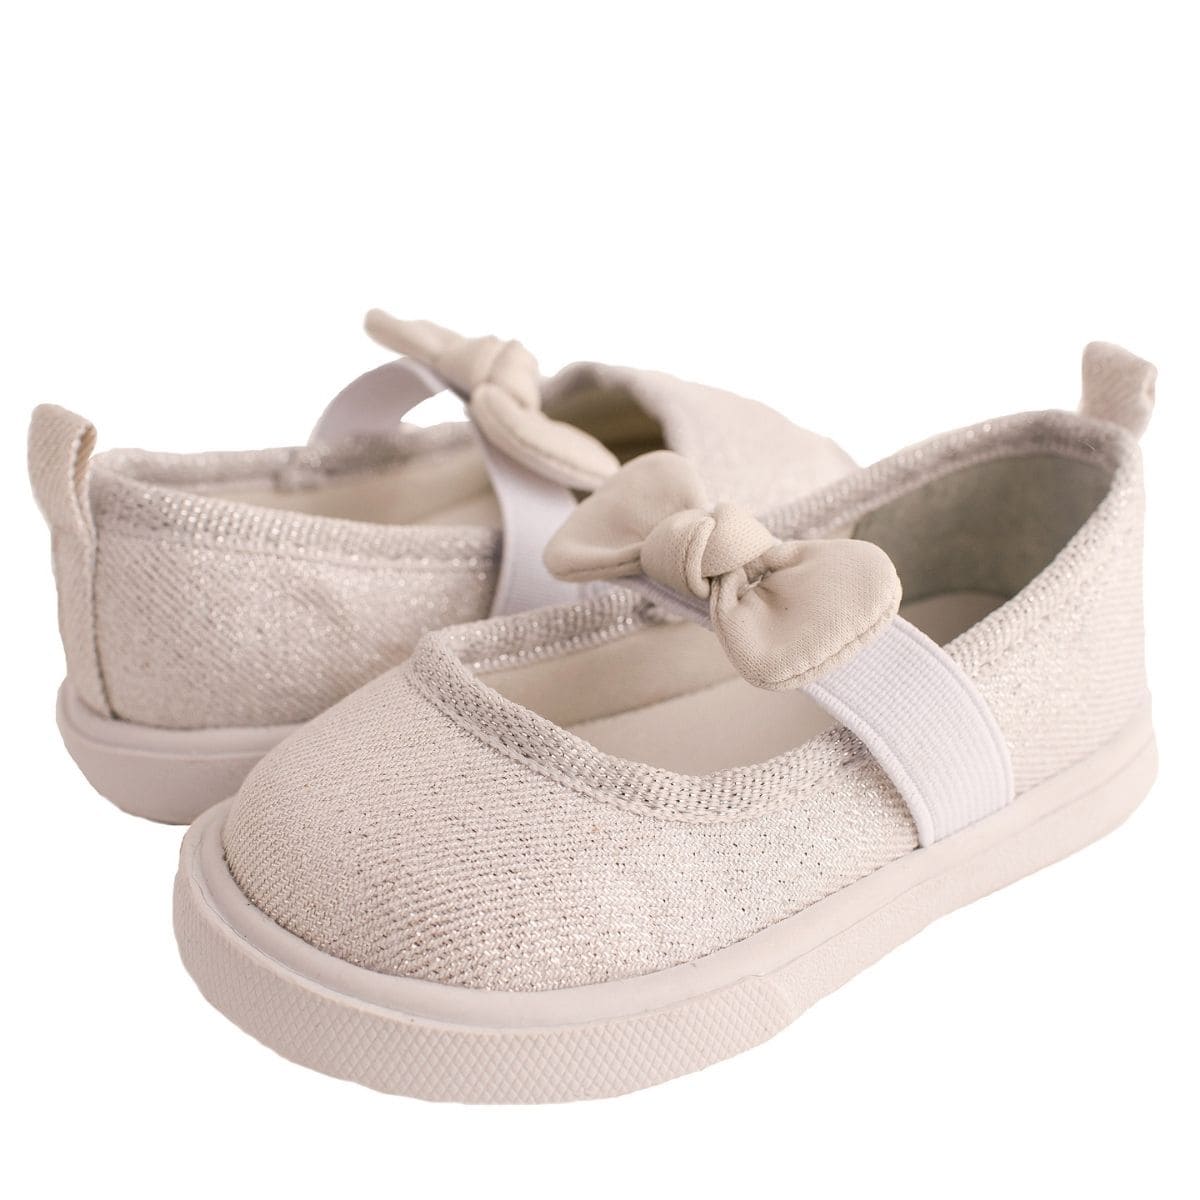 Kaydence Toddler Silver Mary Jane Flats - Kids Shoe Box